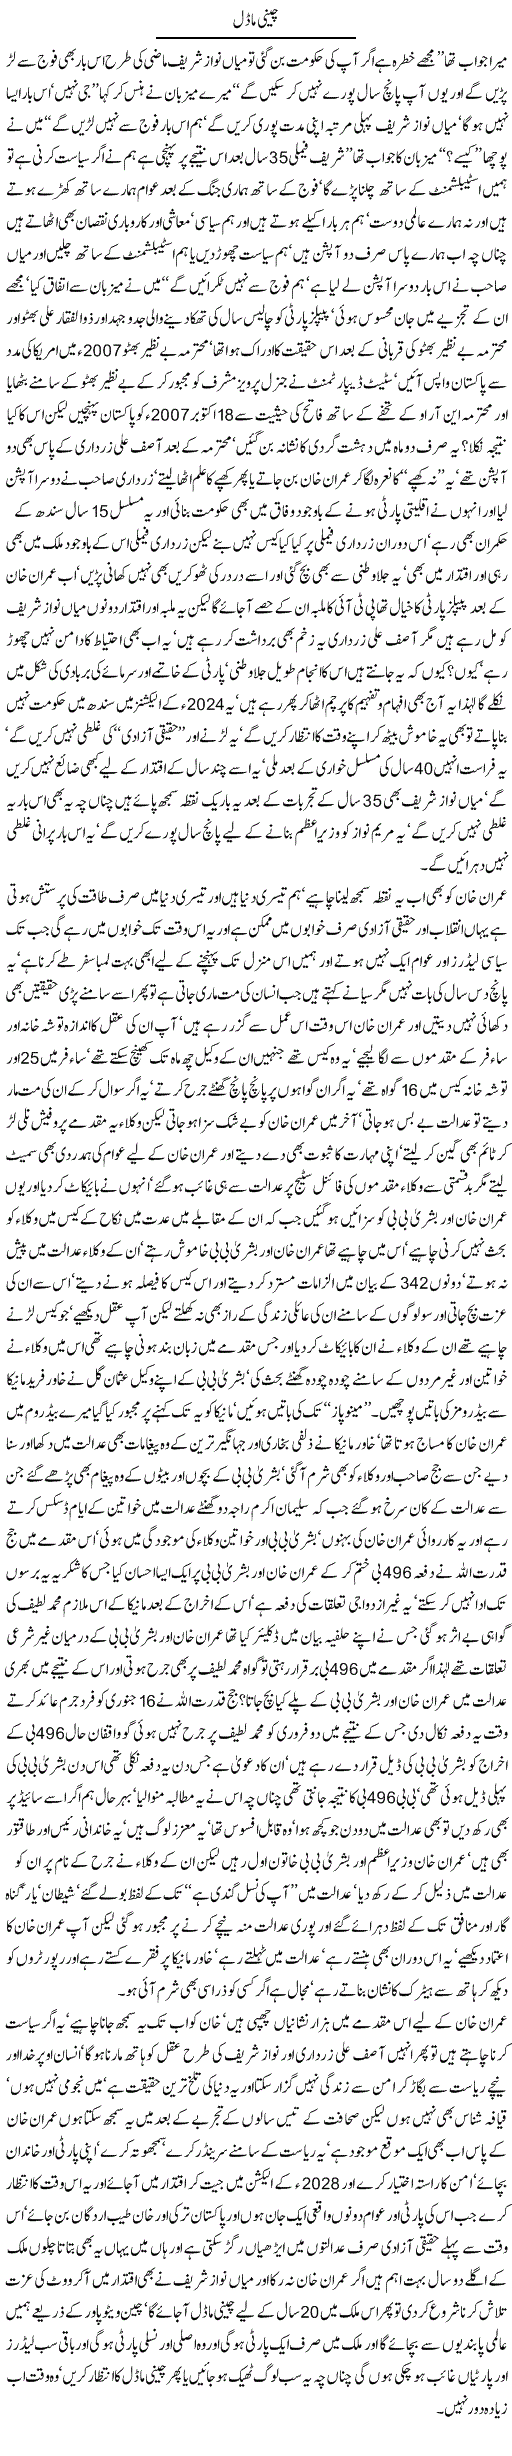 Javed Chaudhry Column About Imran Khan & Bushra Bibi Un-Islamic Nikah Case & Pakistan Politics